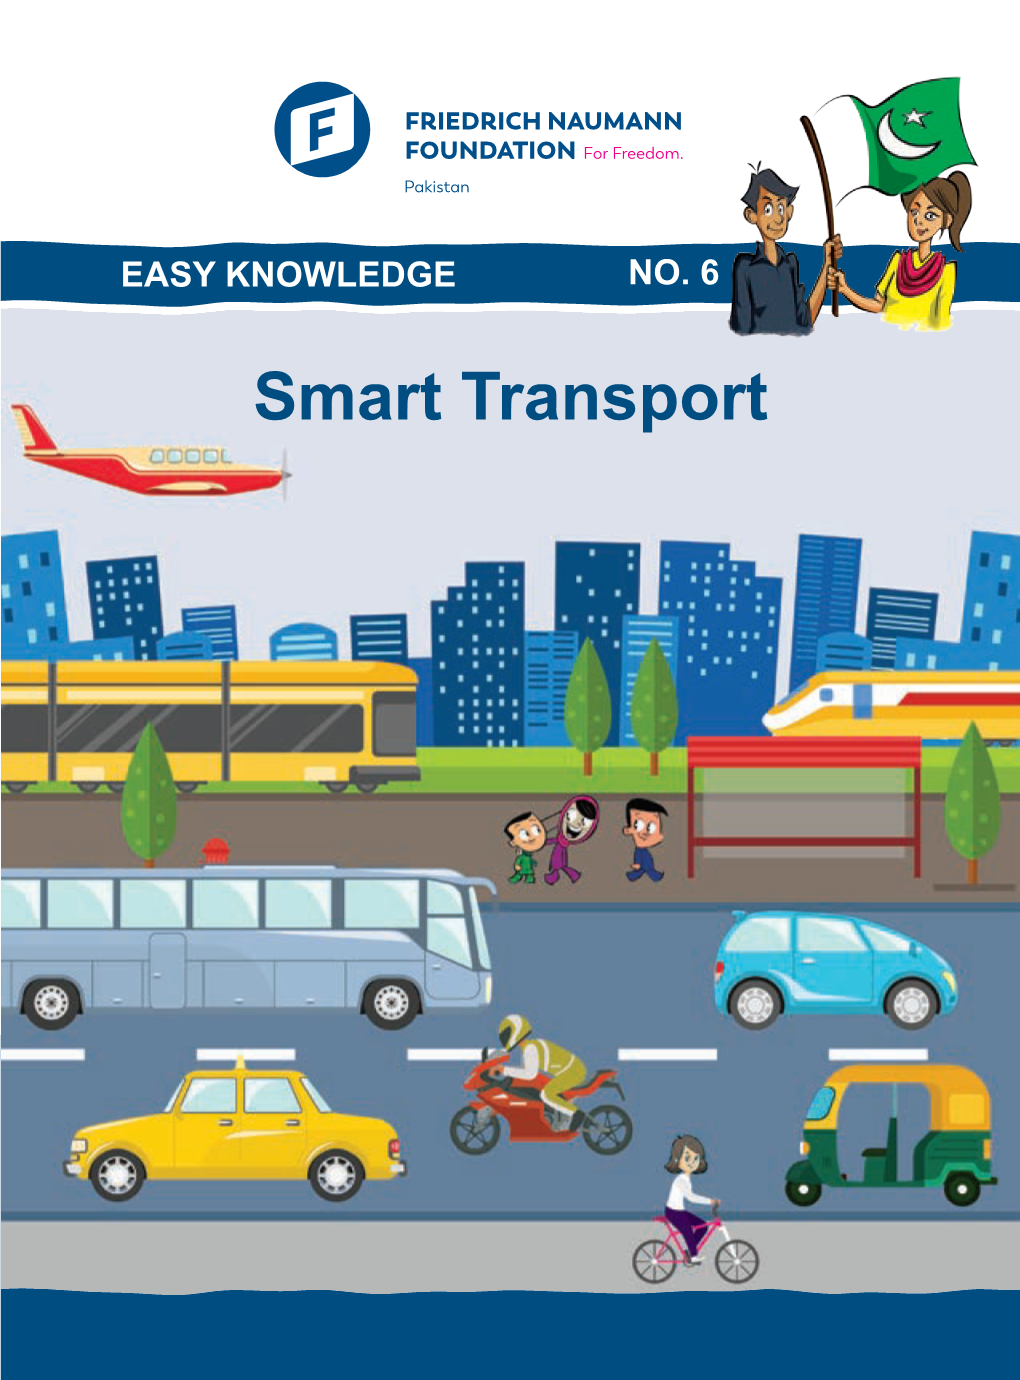 Smart Transport Illustrator: Asma Jehangir